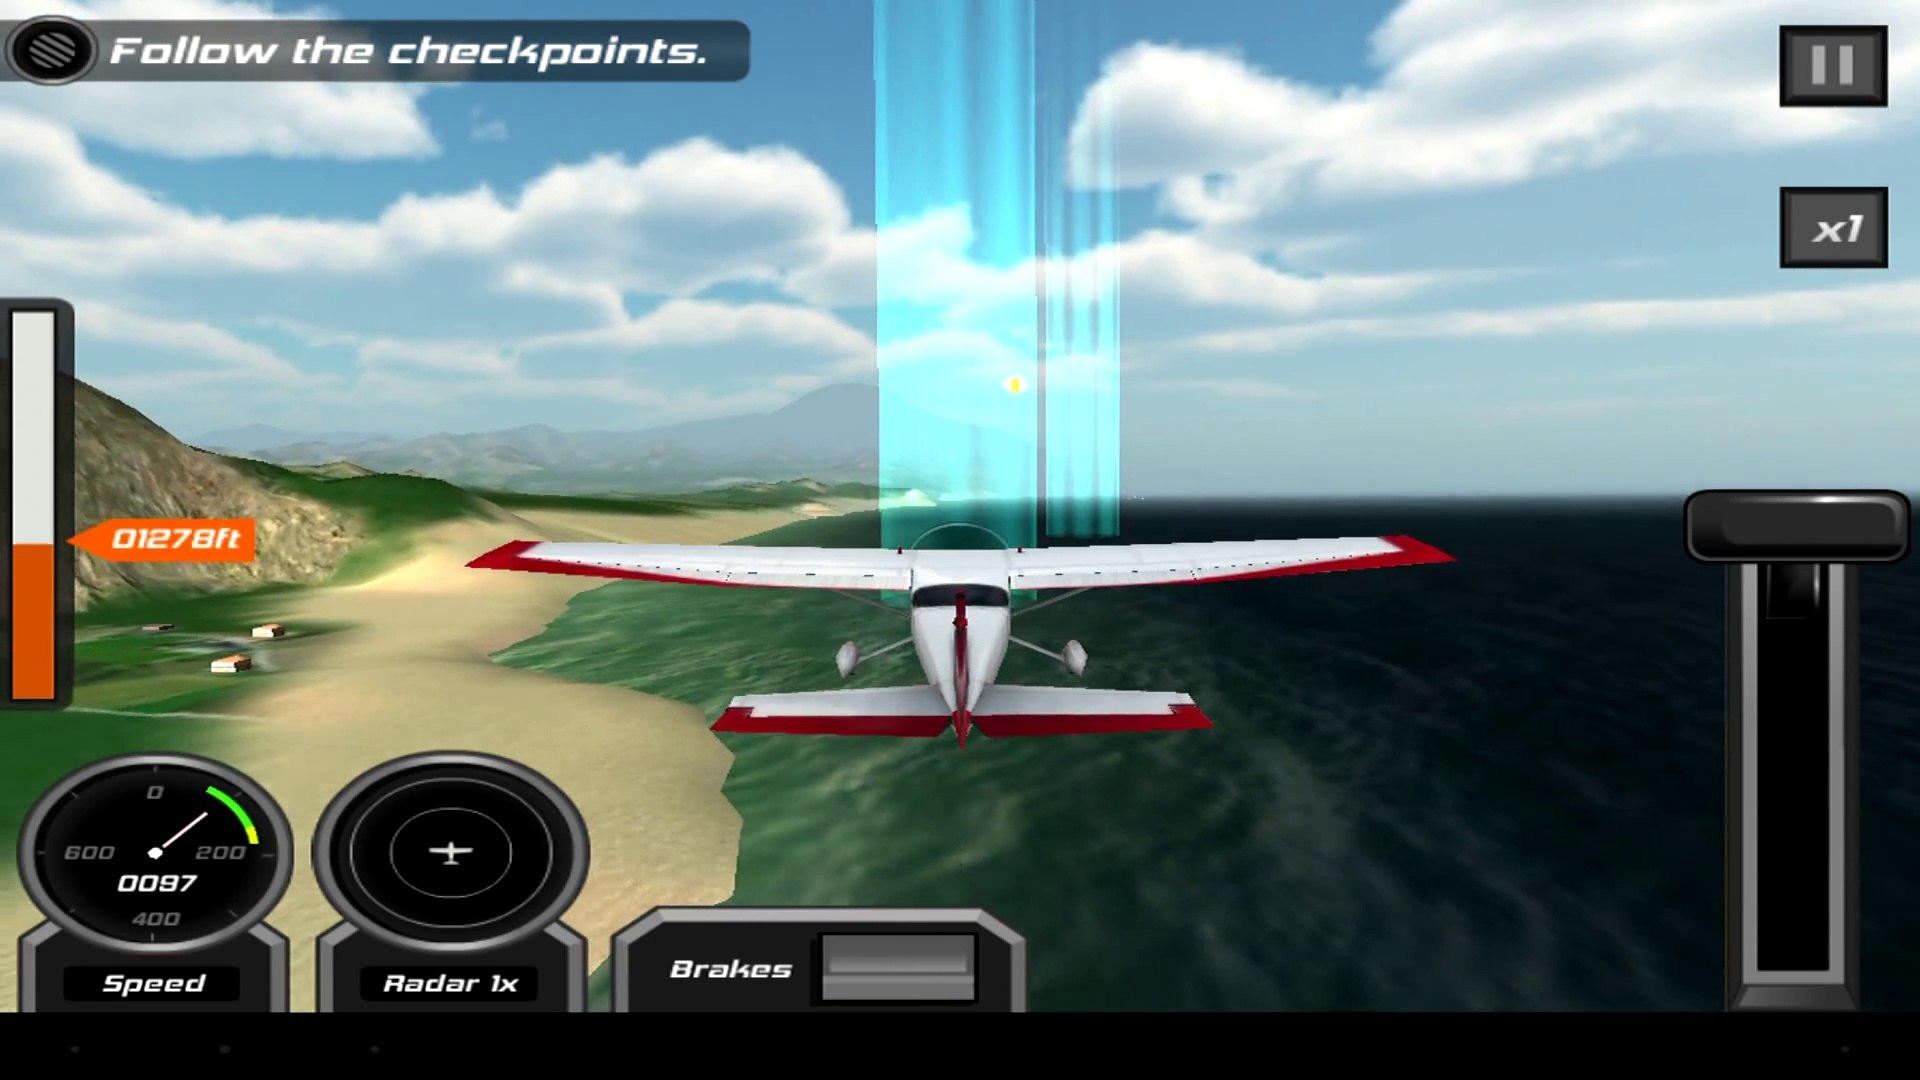 Flight Pilot Simulator 3D Free - Android and iOS gameplay PlayRawNow -  video Dailymotion